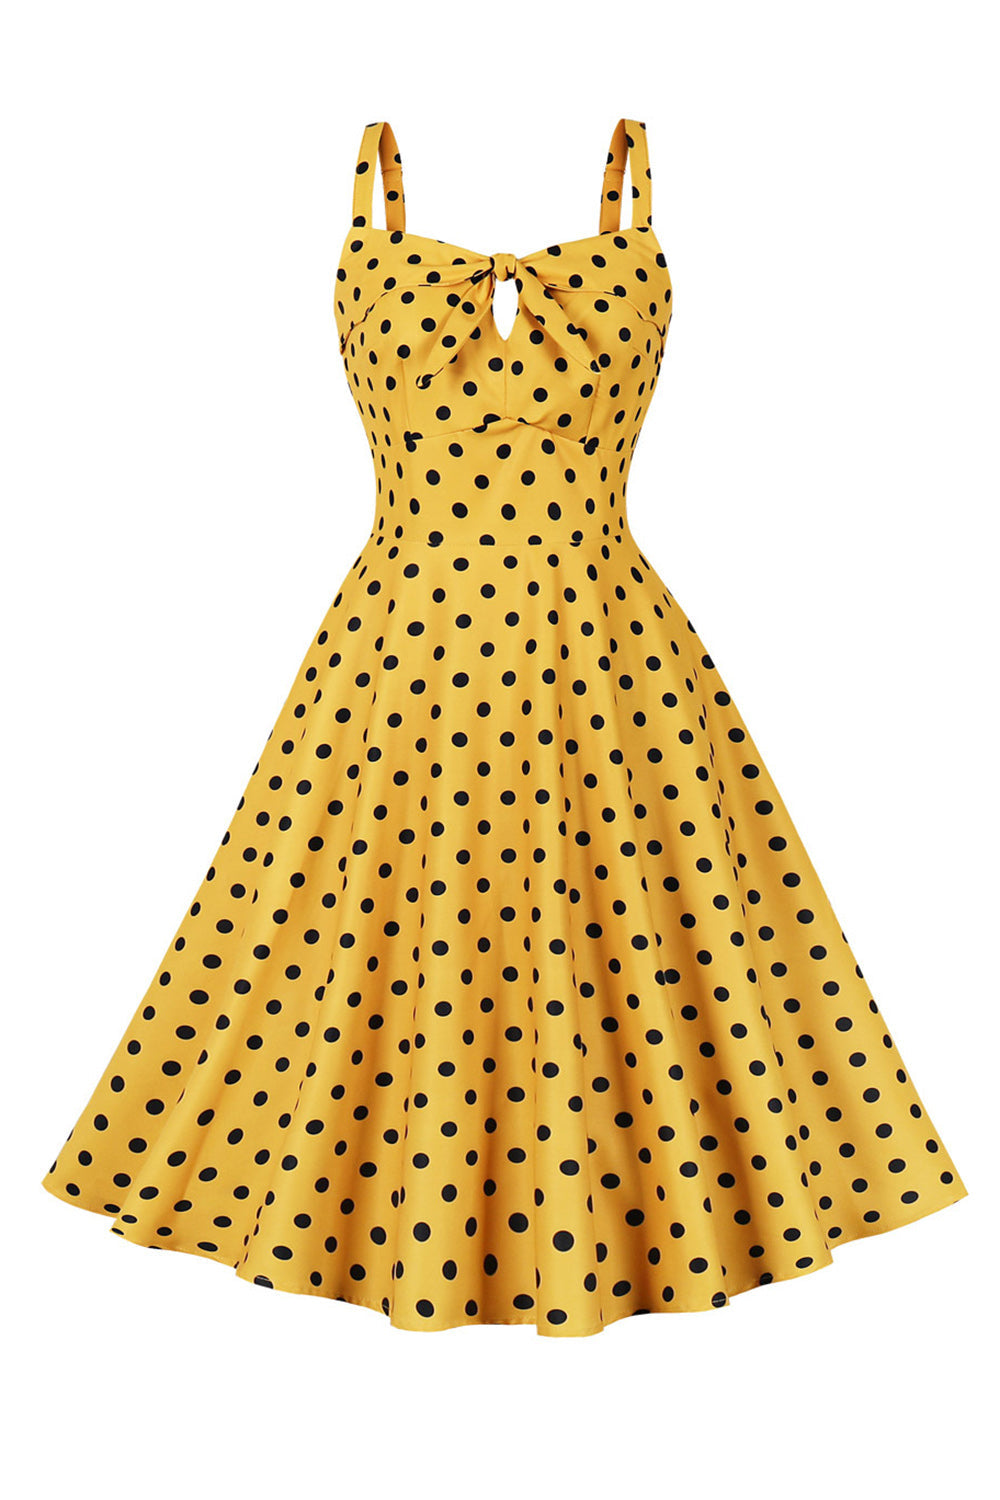 Spaghetti Straps Polka Dots Yellow 1950s Dress